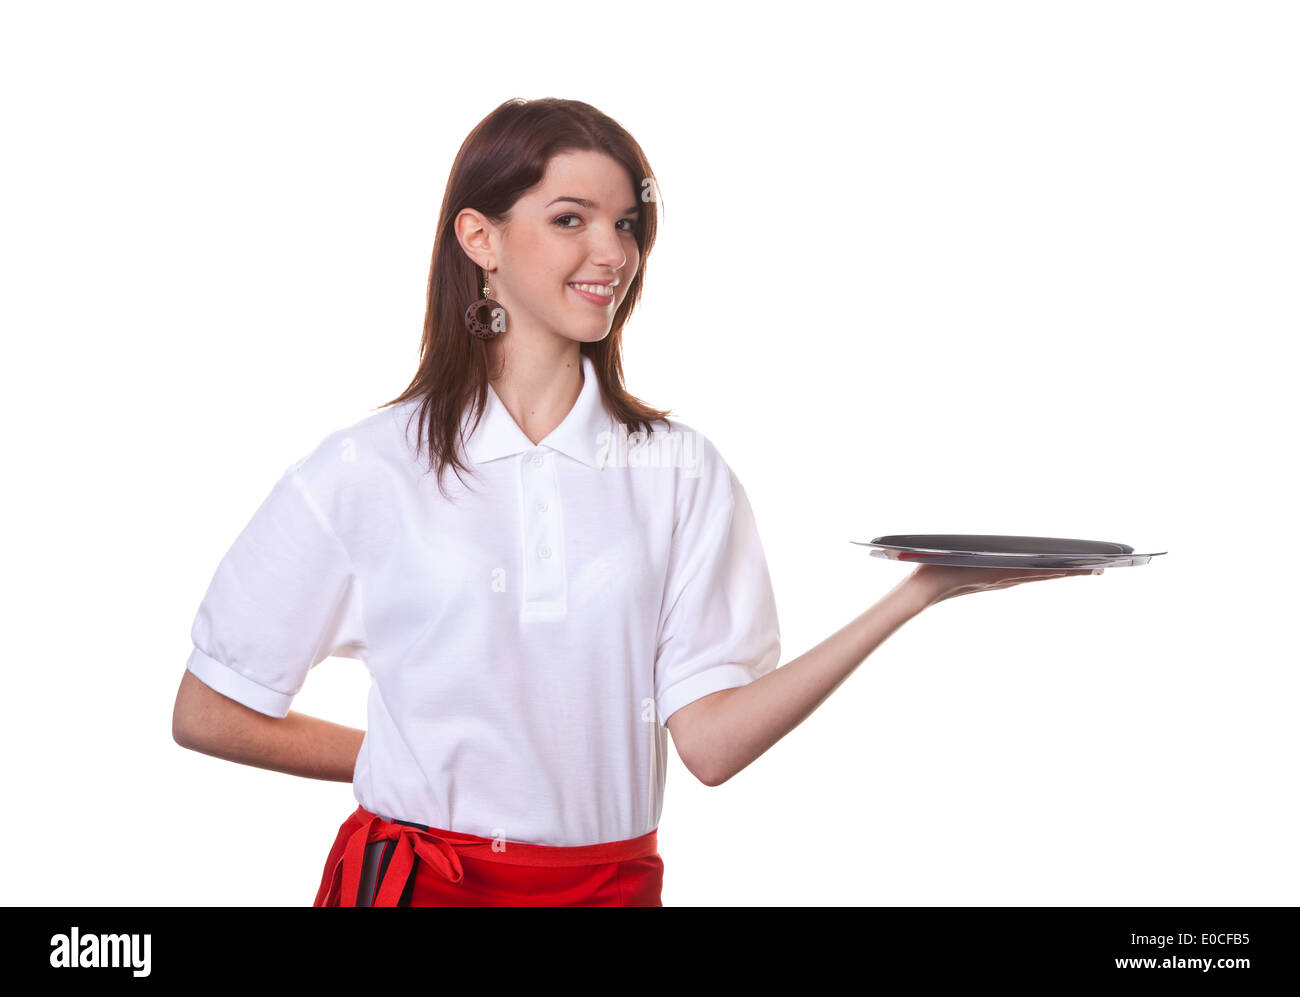 Young woman as a waitress serves drinks on a tray, Junge Frau als Serviererin serviert Getraenke auf einem Tablett Stock Photo